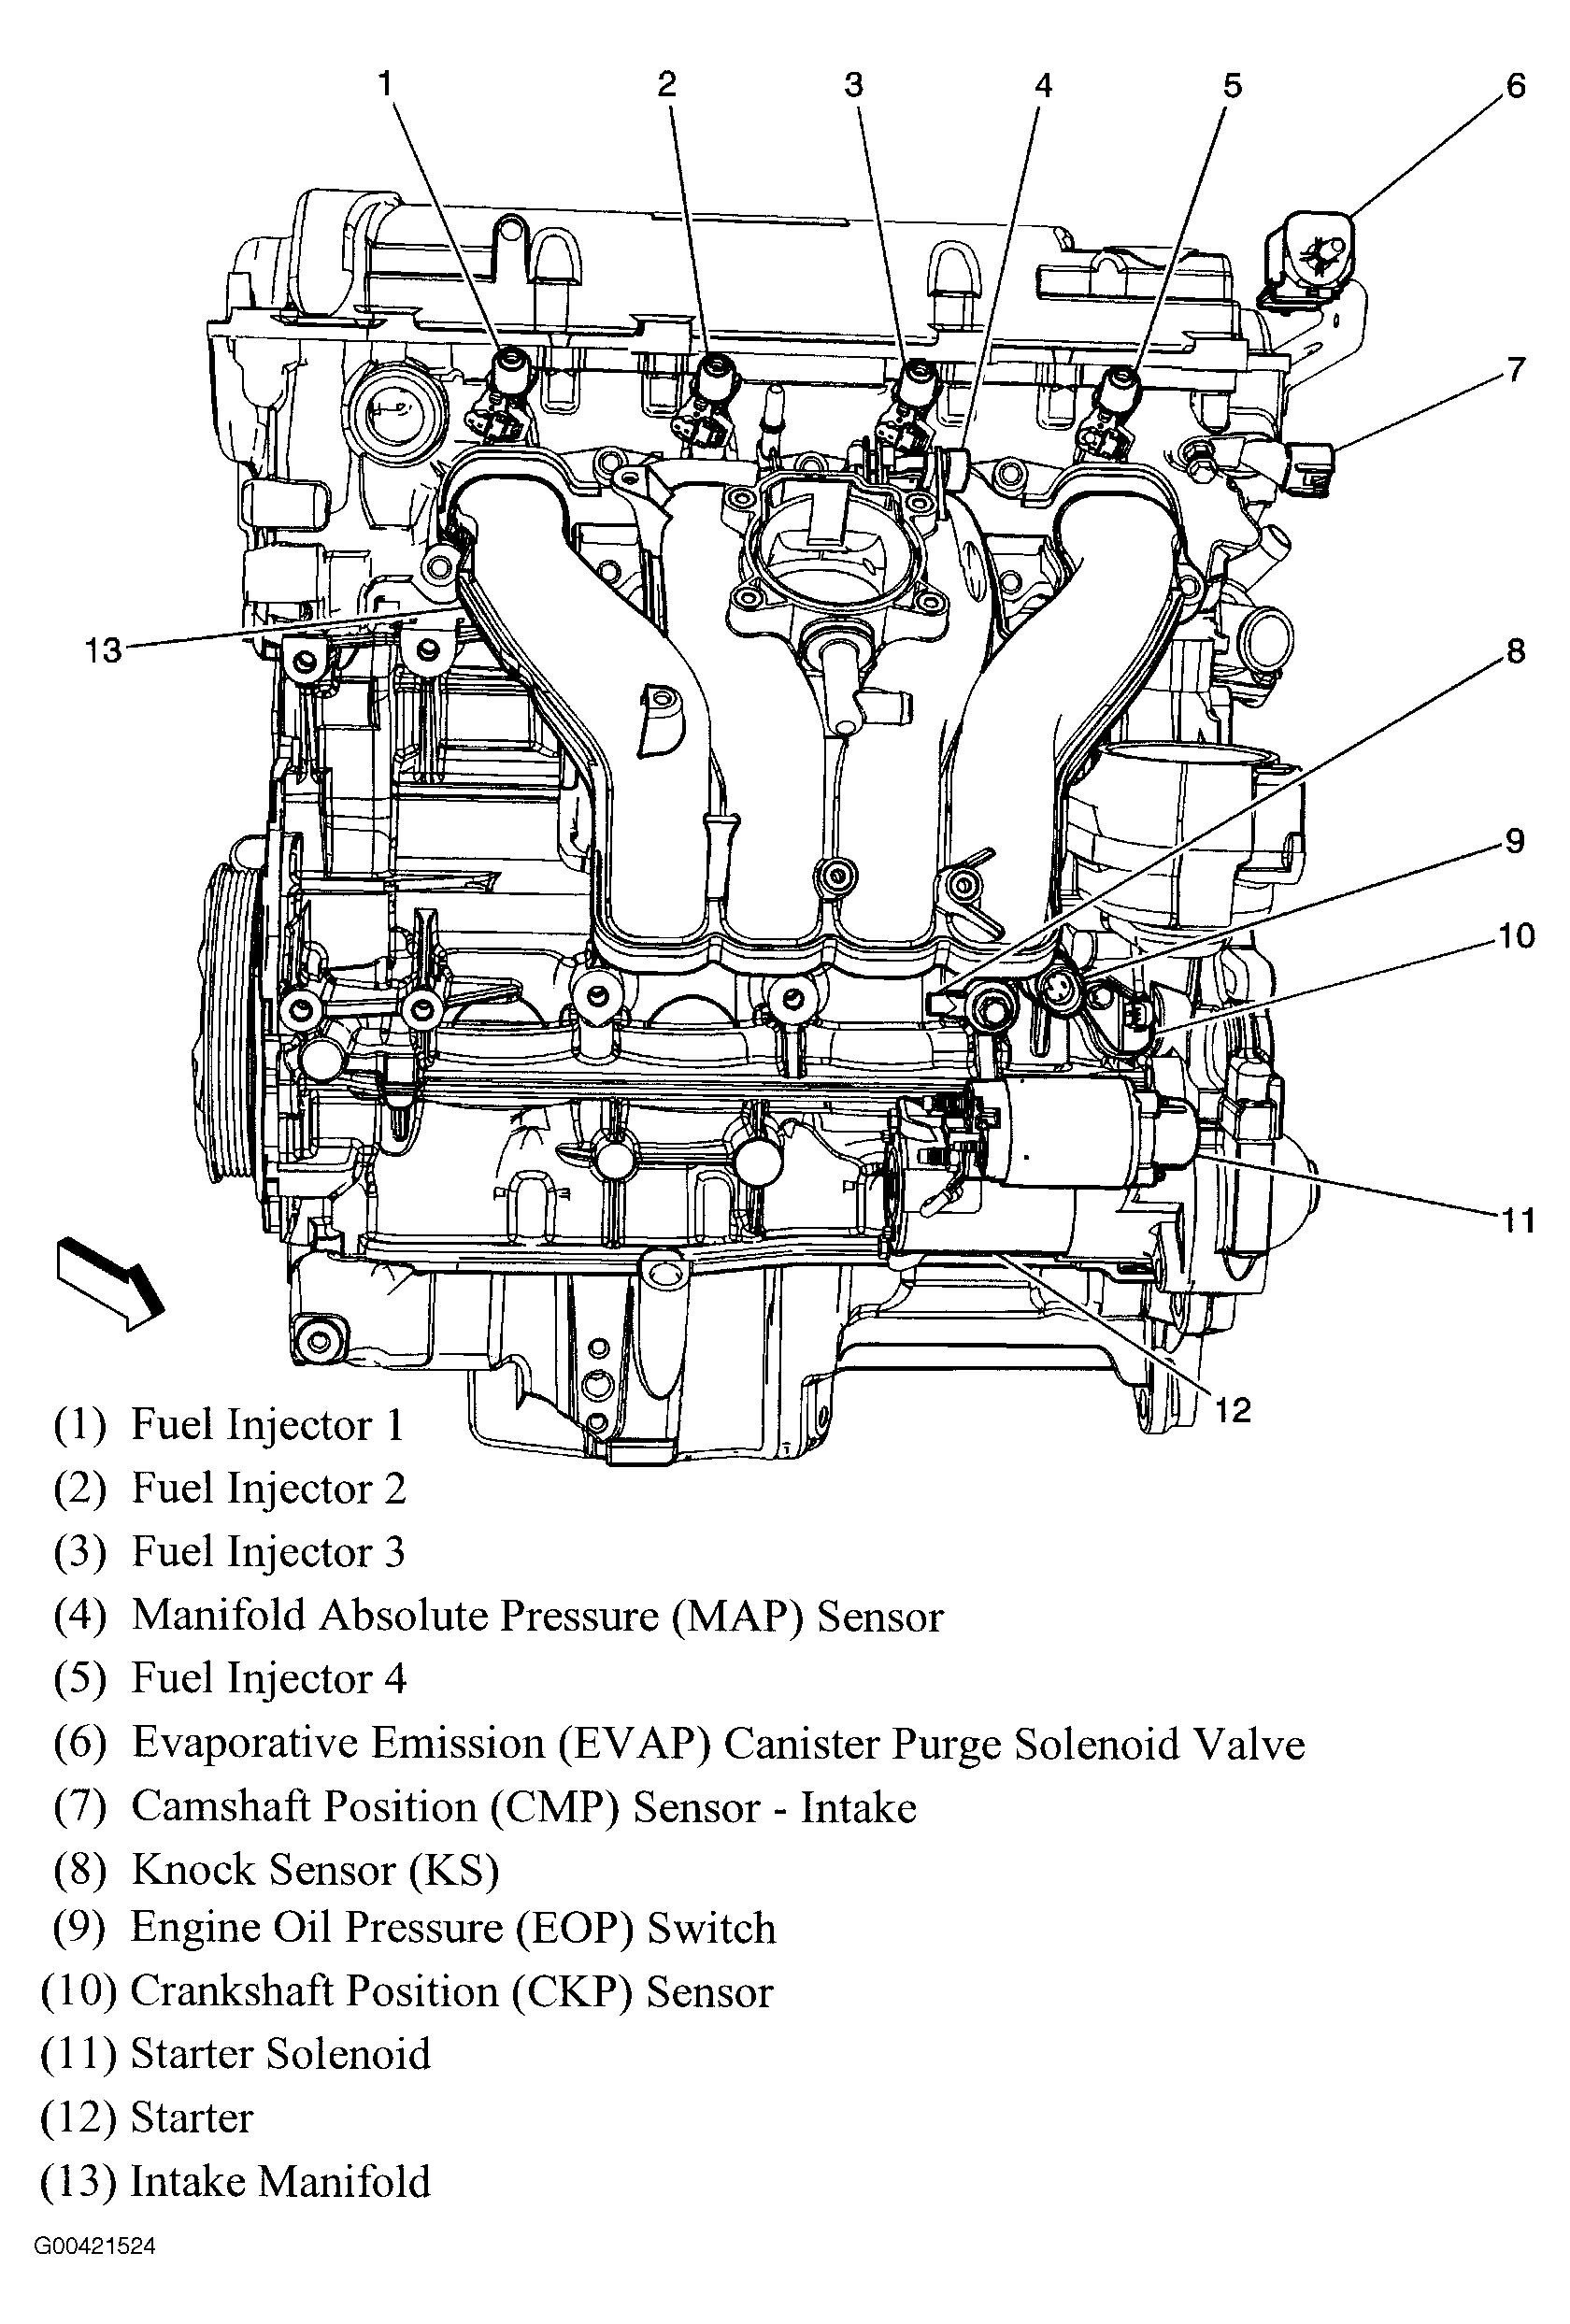 Car Cylinder Diagram 4 Cylinder Car Engine Diagram Wiring Diagram Show Of Car Cylinder Diagram